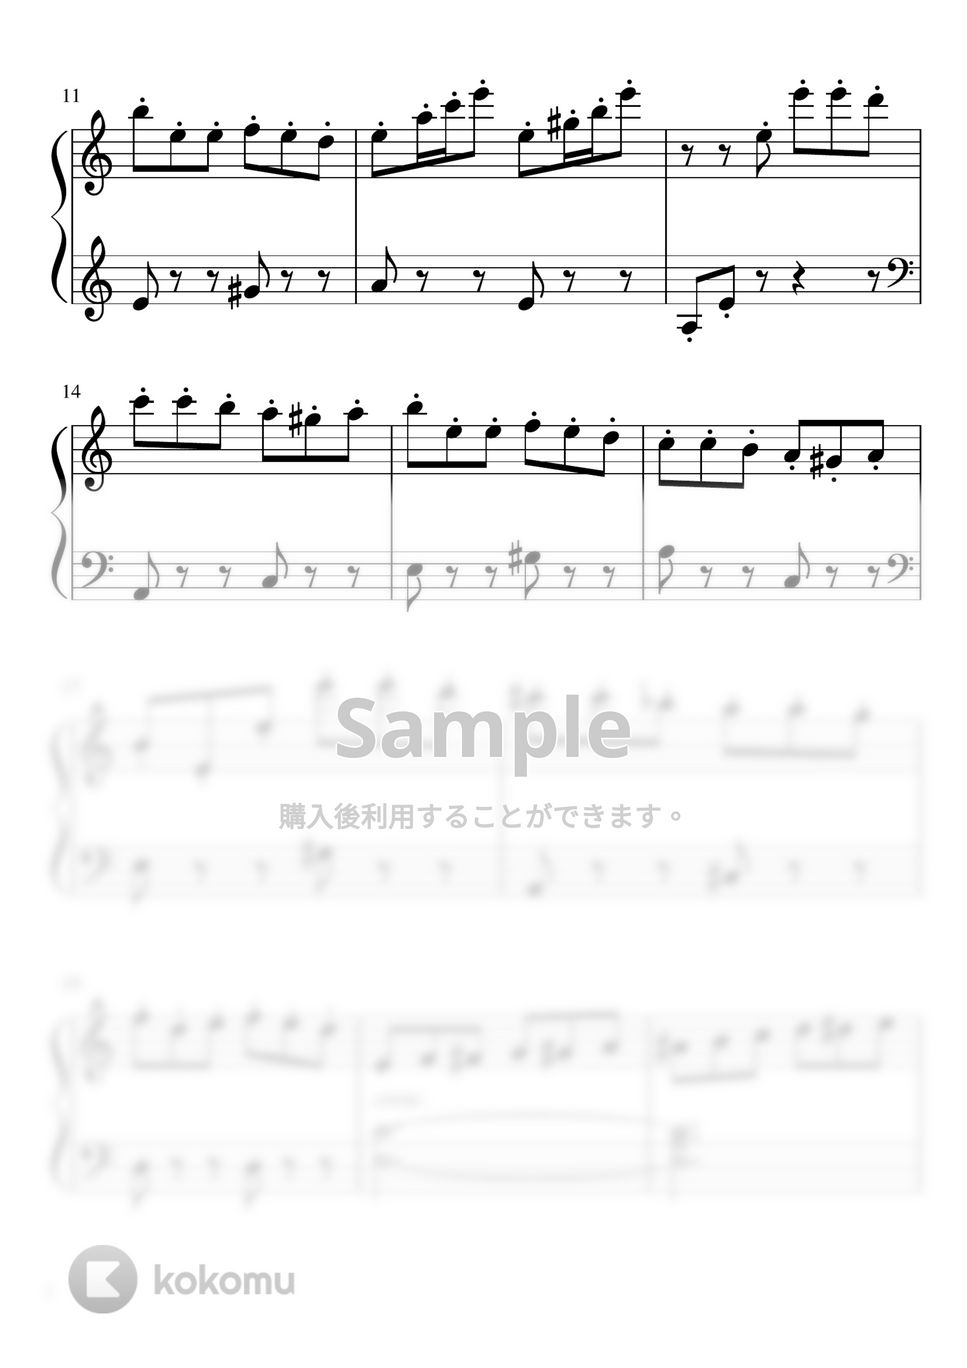 F.リスト - ラ・カンパネラ (Am・ピアノソロ初級) by pfkaori